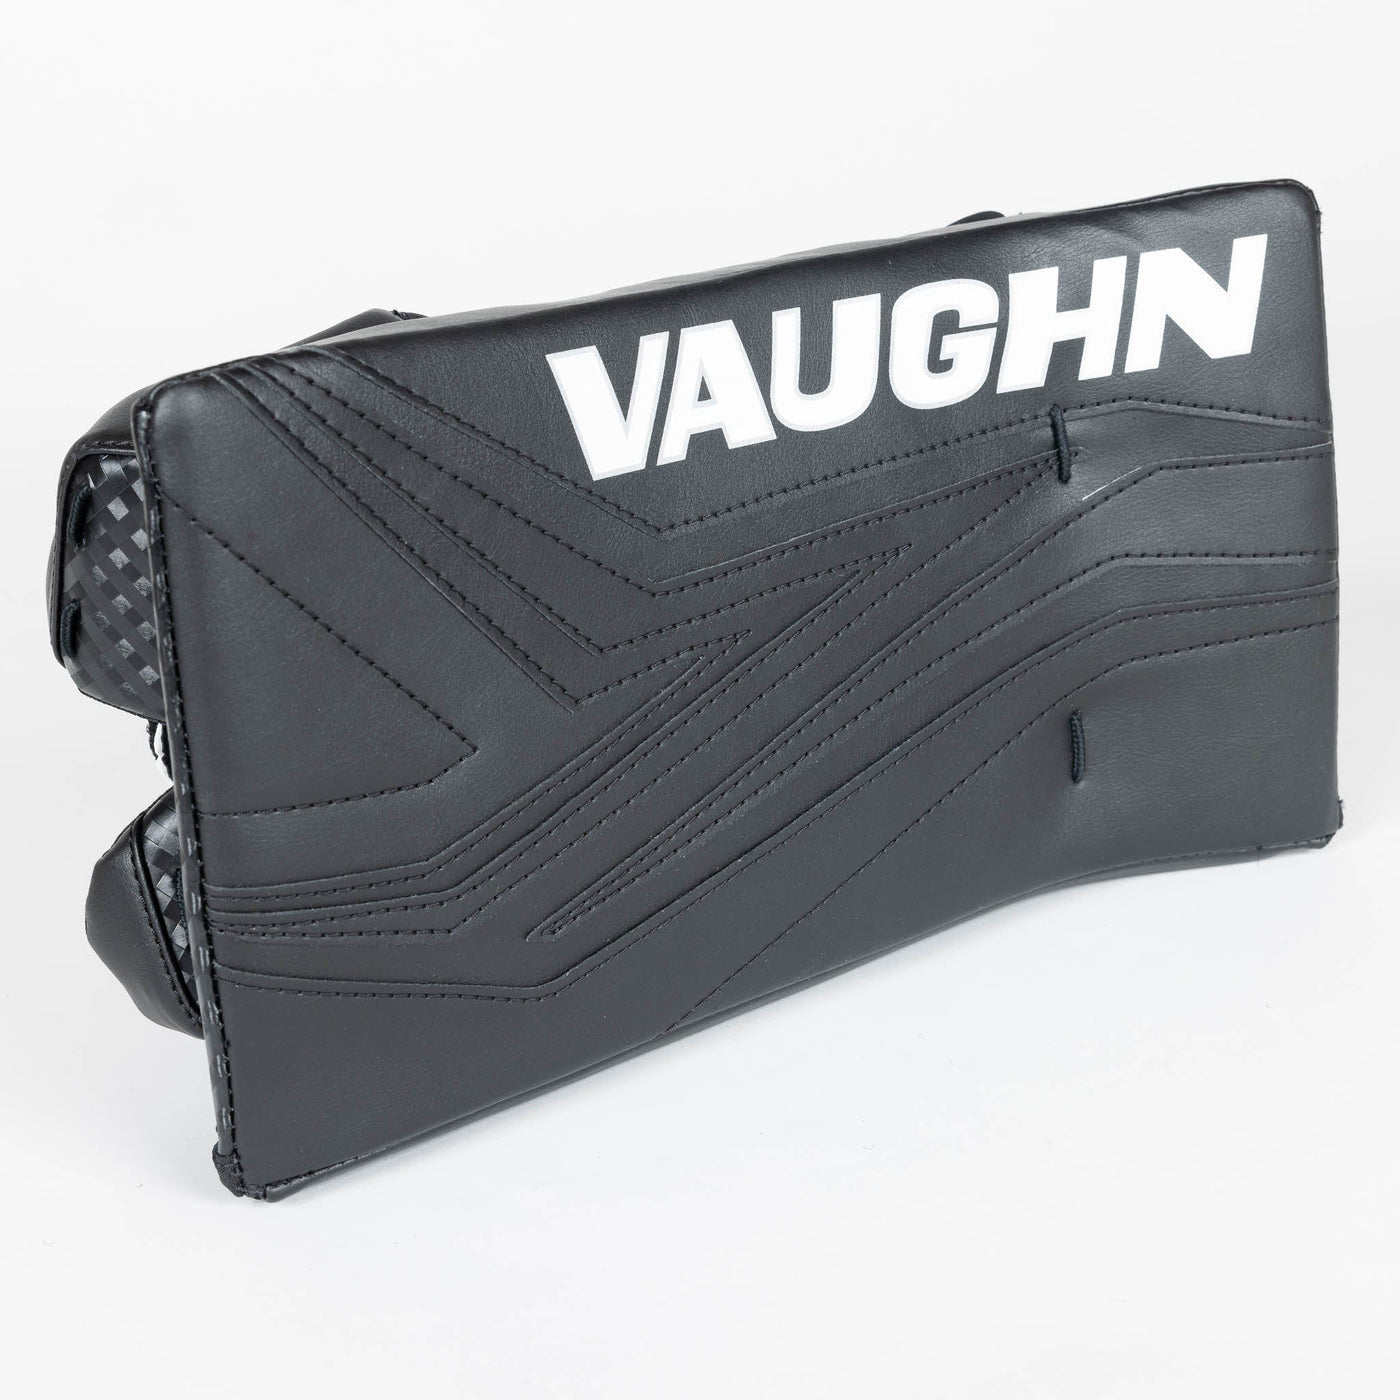 Vaughn Ventus SLR3 Junior Goalie Blocker - The Hockey Shop Source For Sports